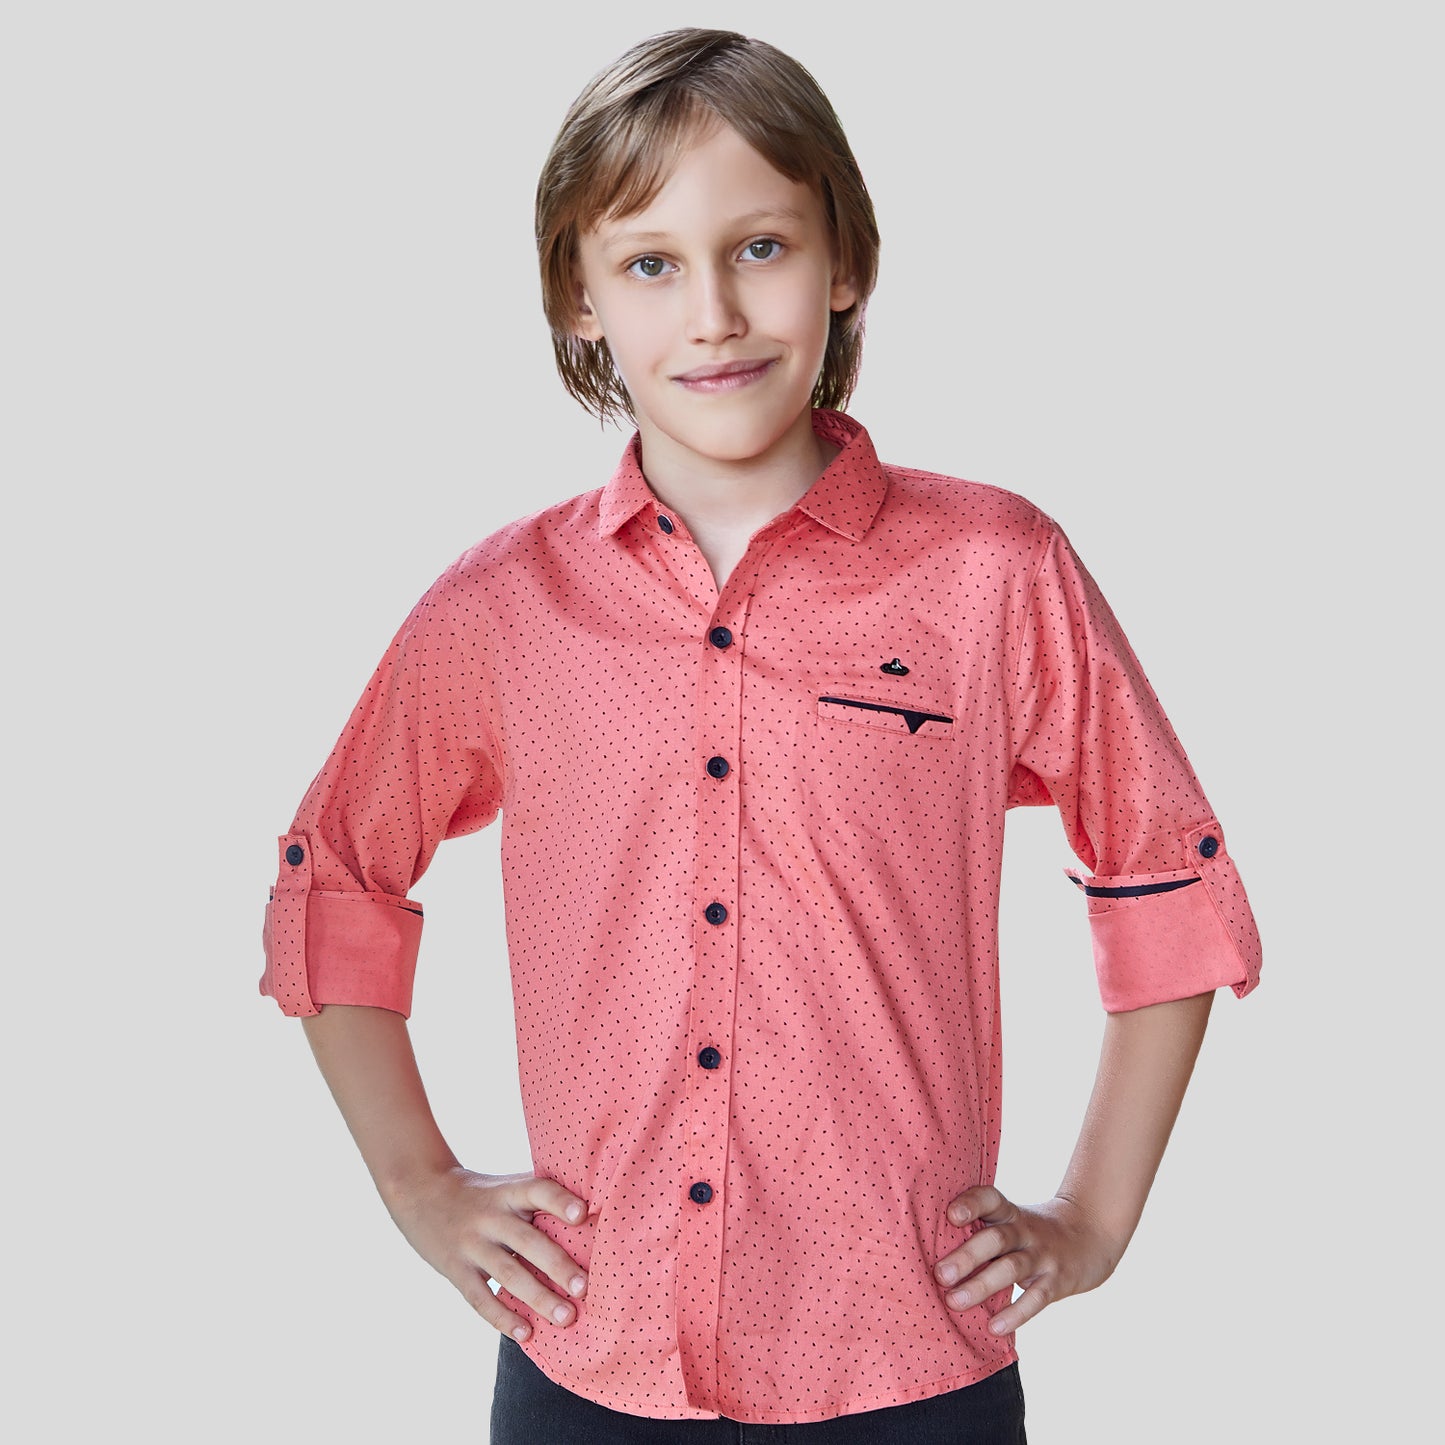 Suprimo Dobby Lycra  Printed Shirt for Young Boys